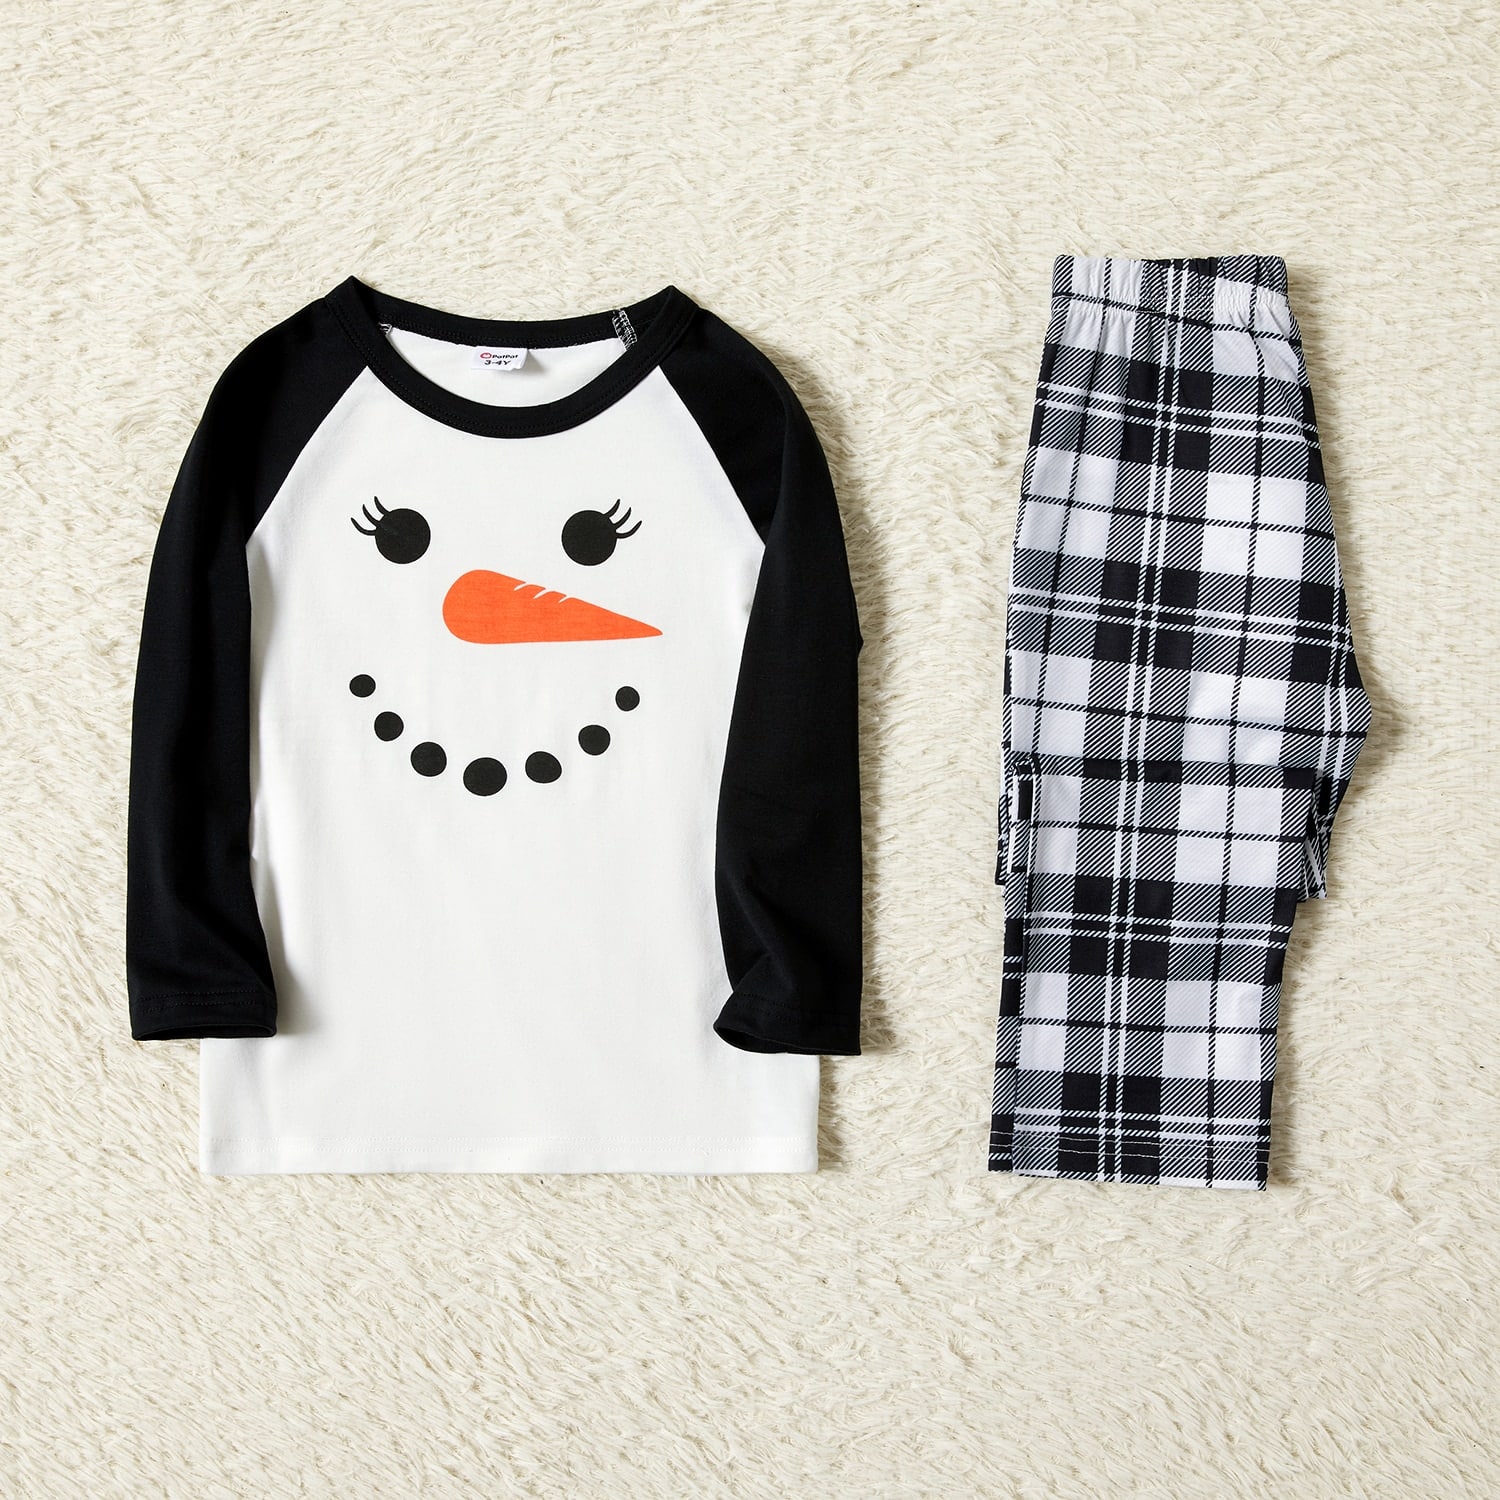 Pyjama de noël bonhomme de neige assorti pour toute la famille pyjama de noel bonhomme de neige assorti pour toute la famille 4